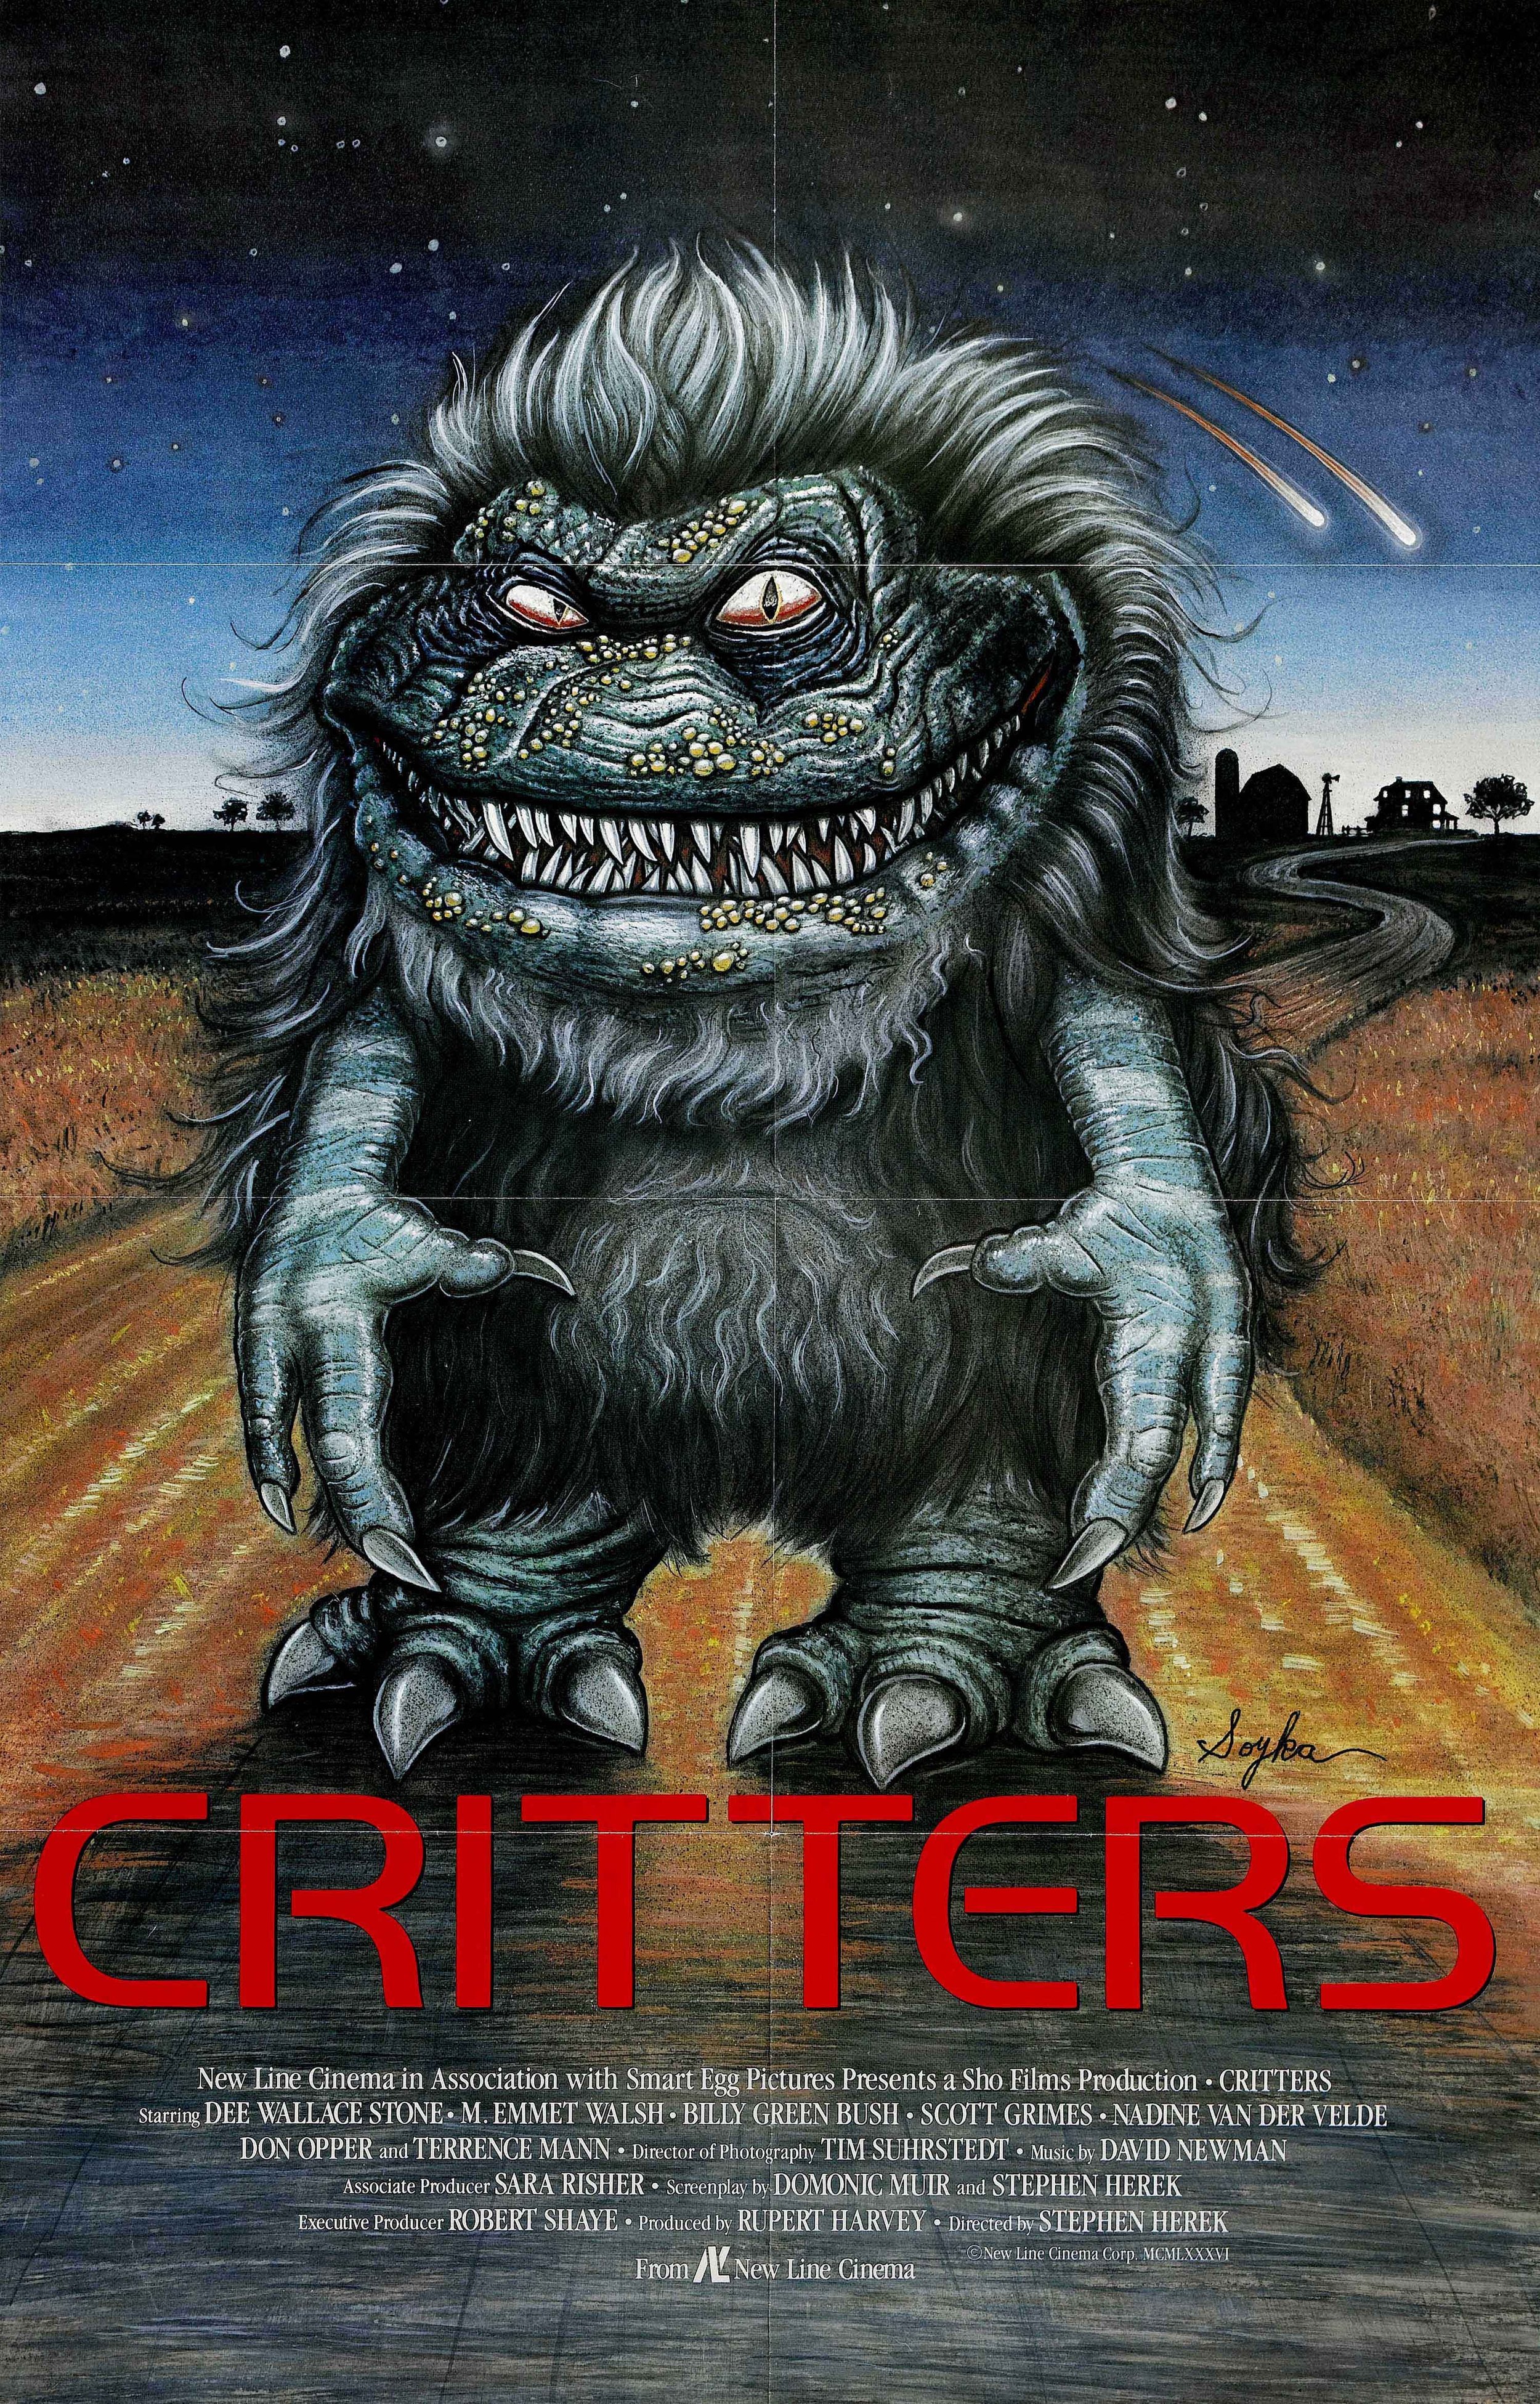 Critters Poster.jpeg